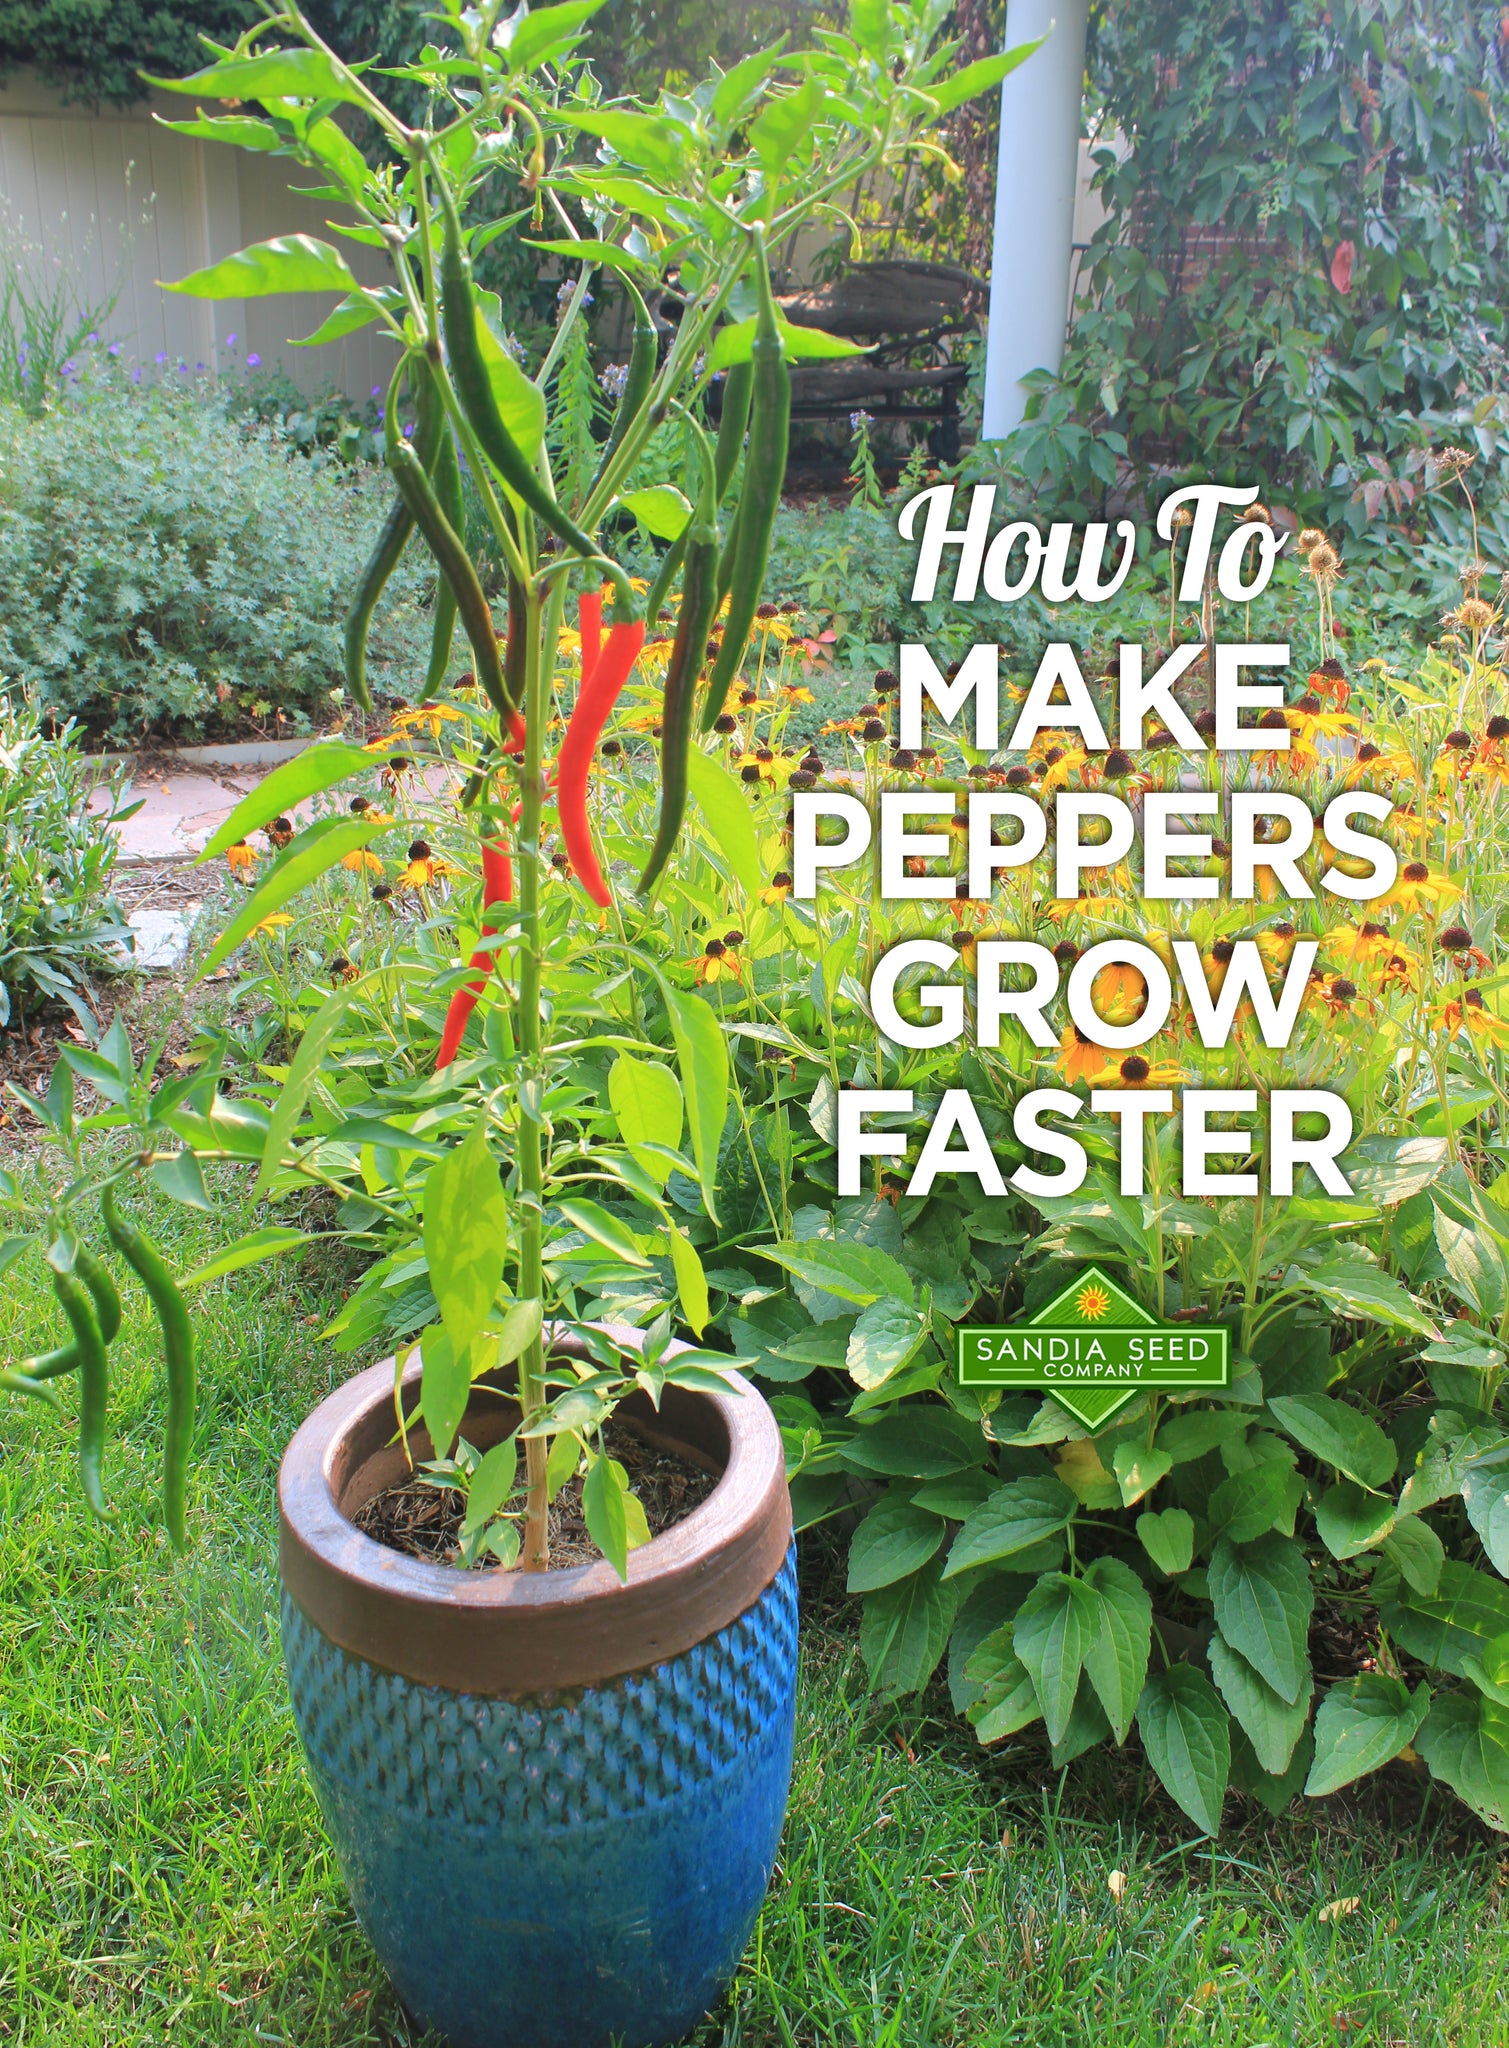 https://cdn.shopify.com/s/files/1/0871/0950/files/how-to-make-peppers-grow-faster_2048x2048.jpg?v=1583787674